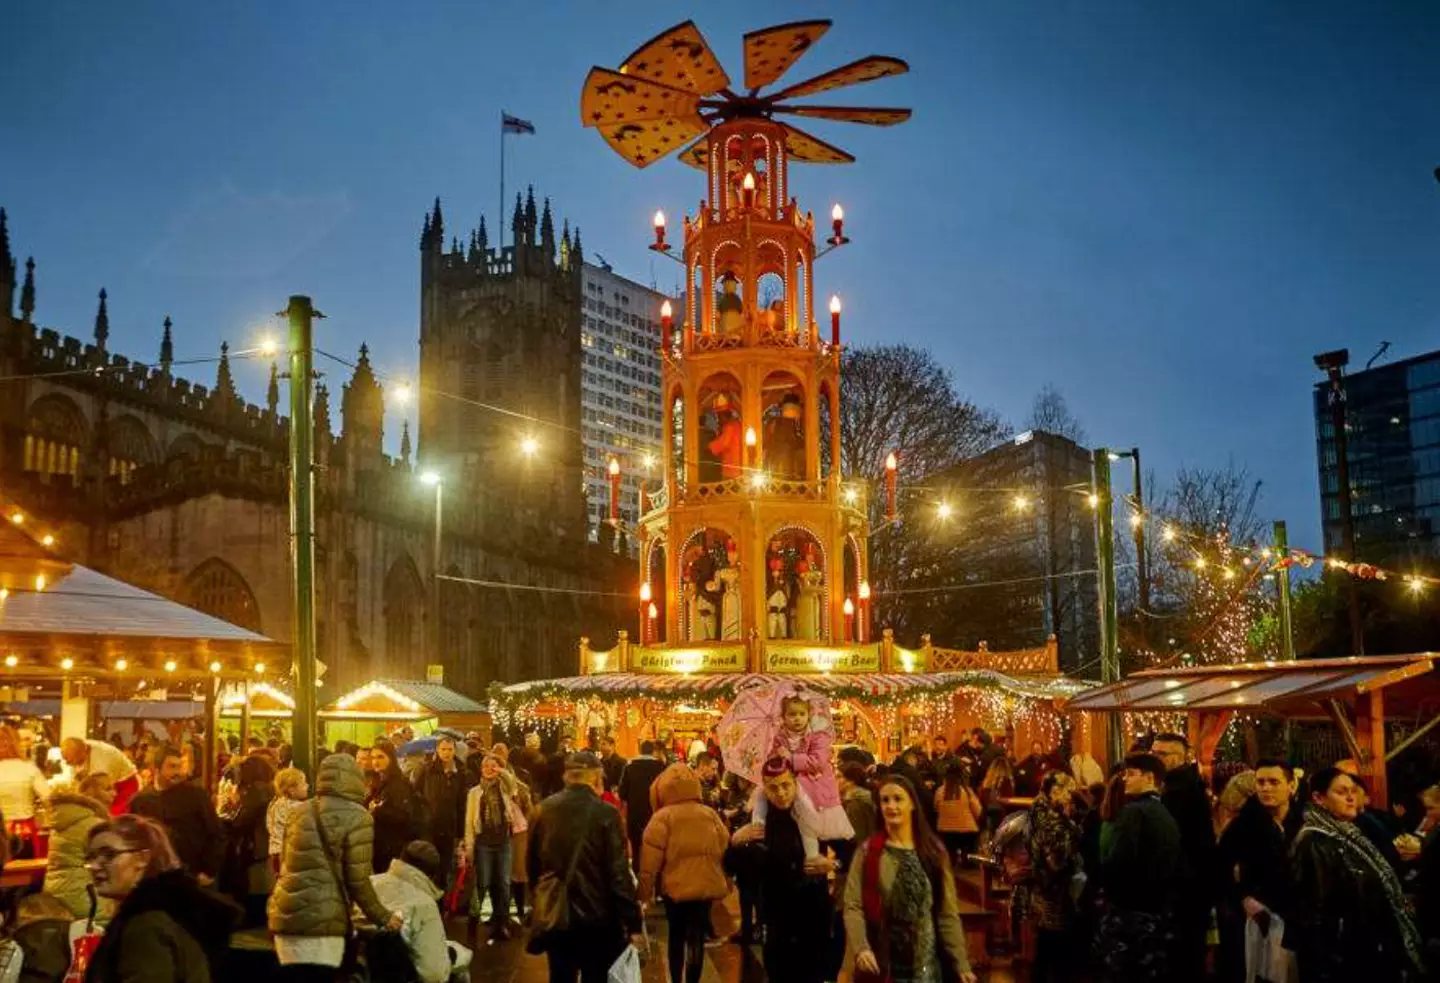 Mancs can look forward to 300 huts at Manchester Christmas Market.